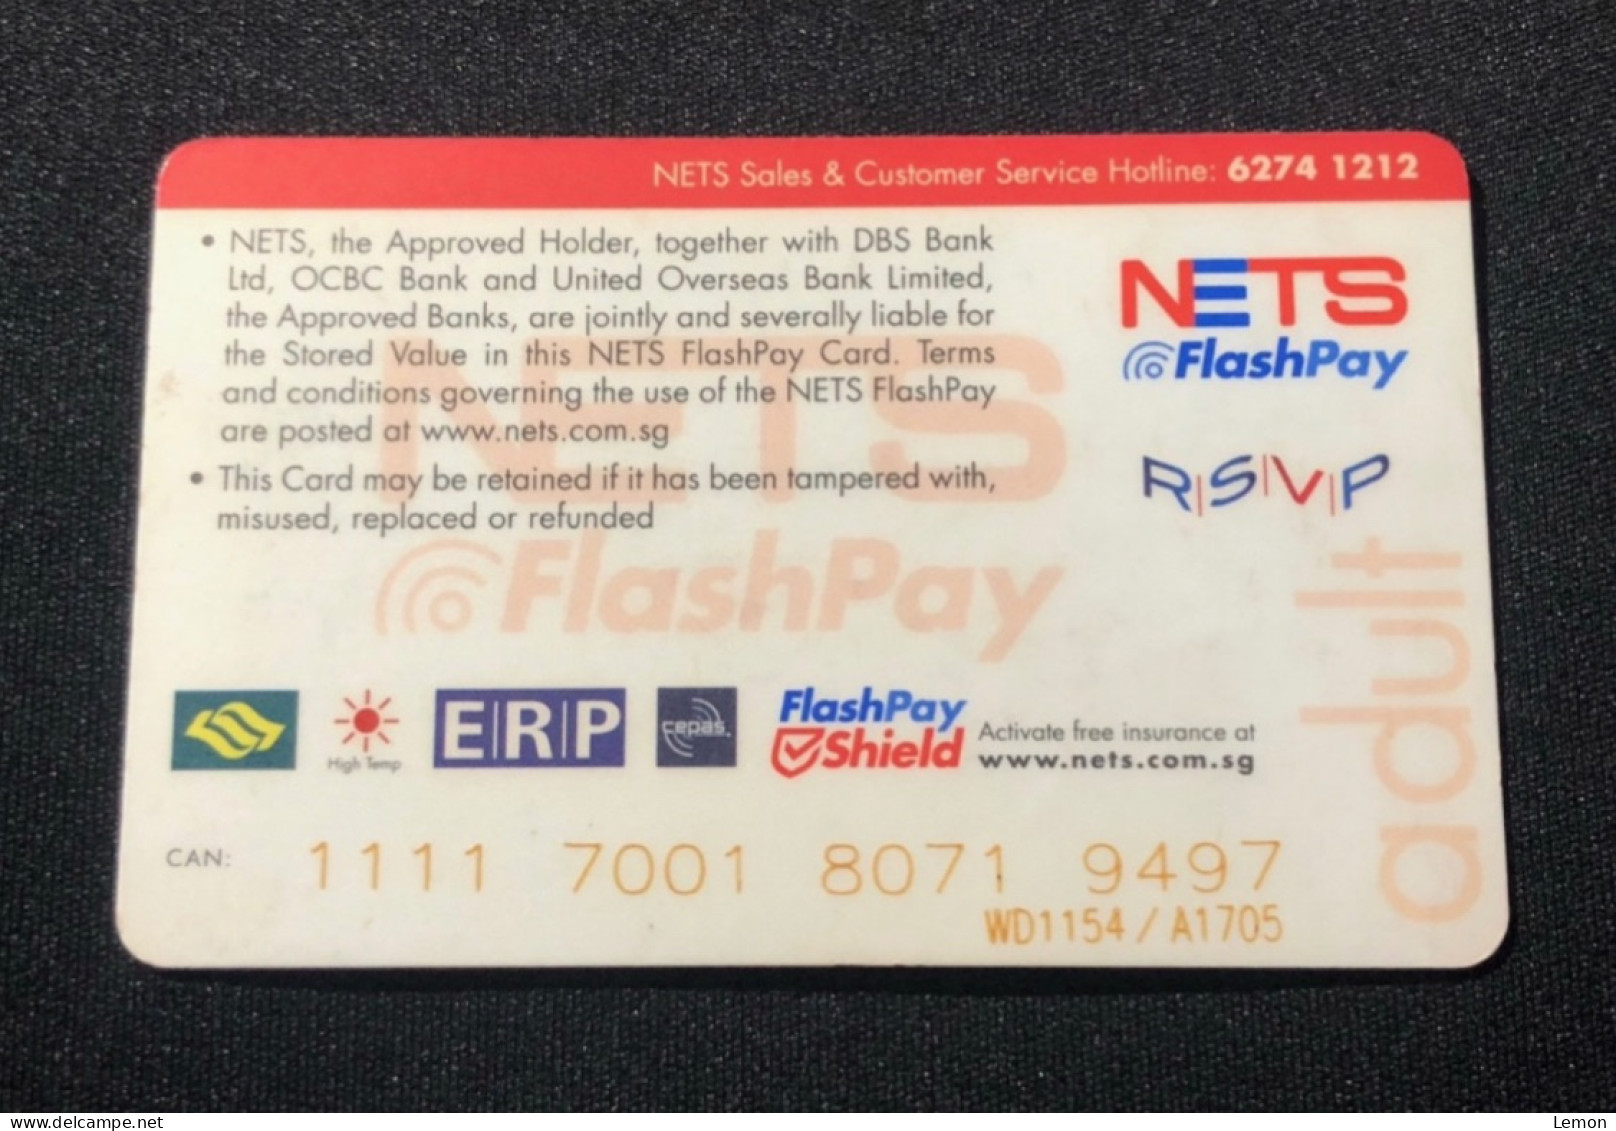 Singapore Nets Flashpay EZ Link Transport Metro Train Subway Card, SMRT 30 Years Silver, Set Of 1 Used Card - Singapur